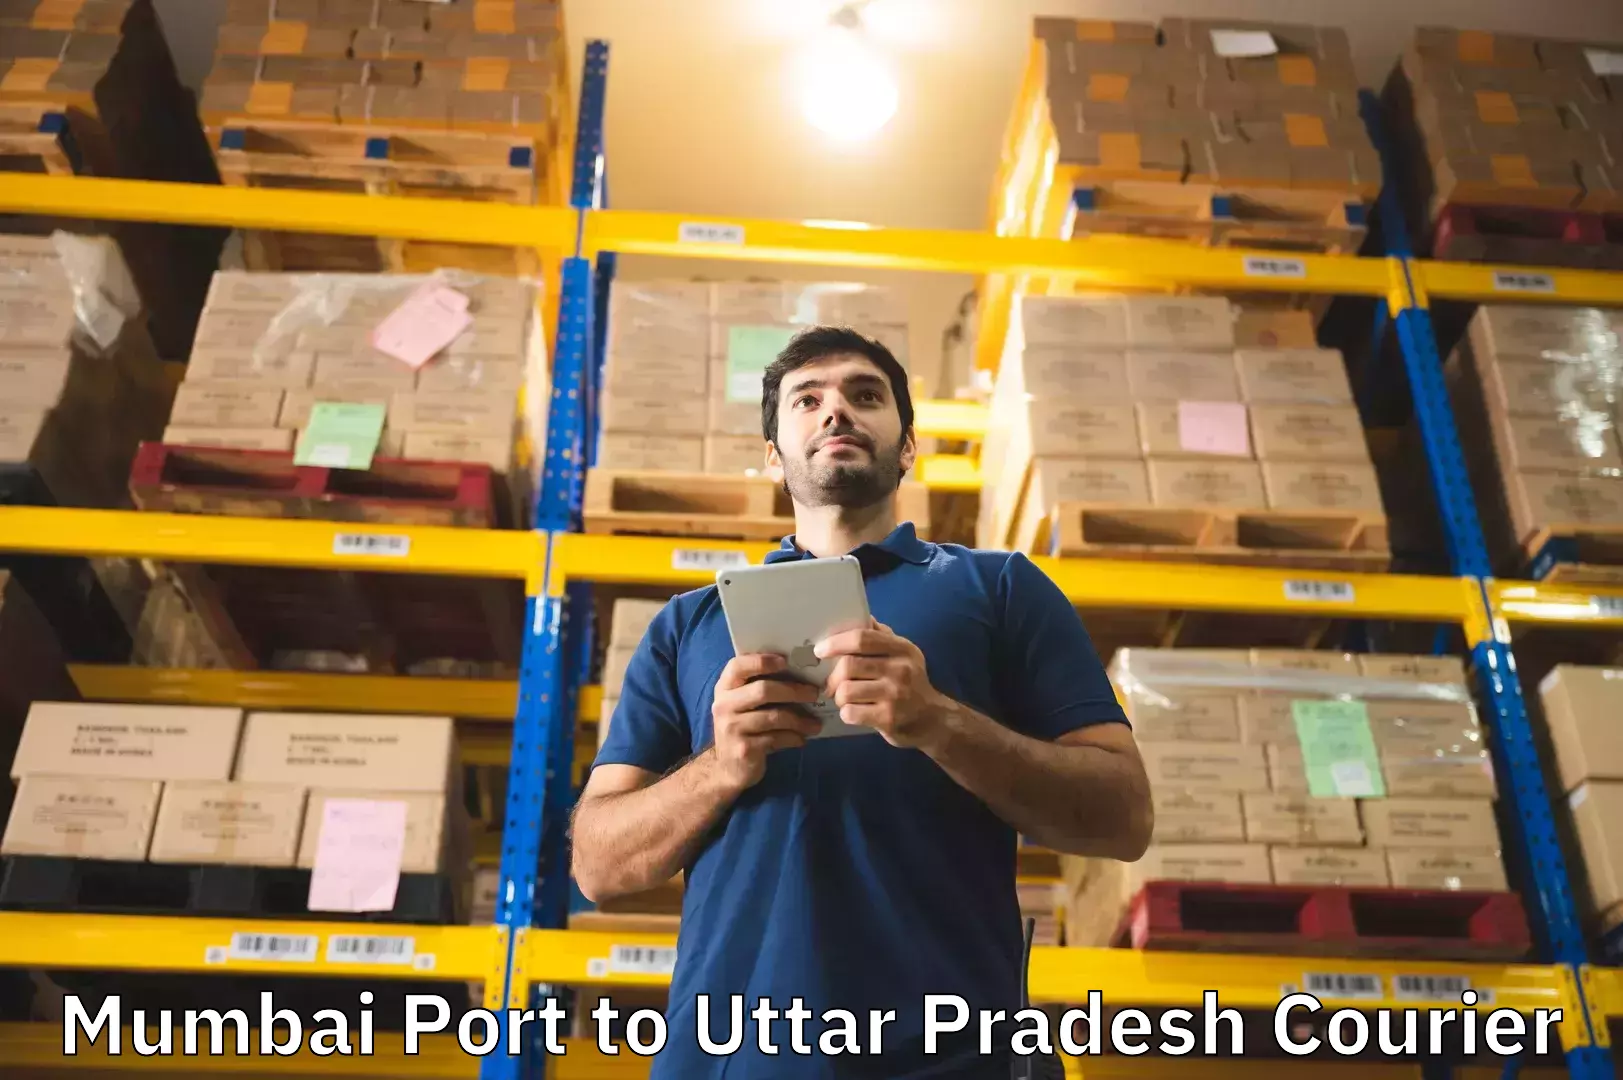 Luggage transport company Mumbai Port to Uttar Pradesh